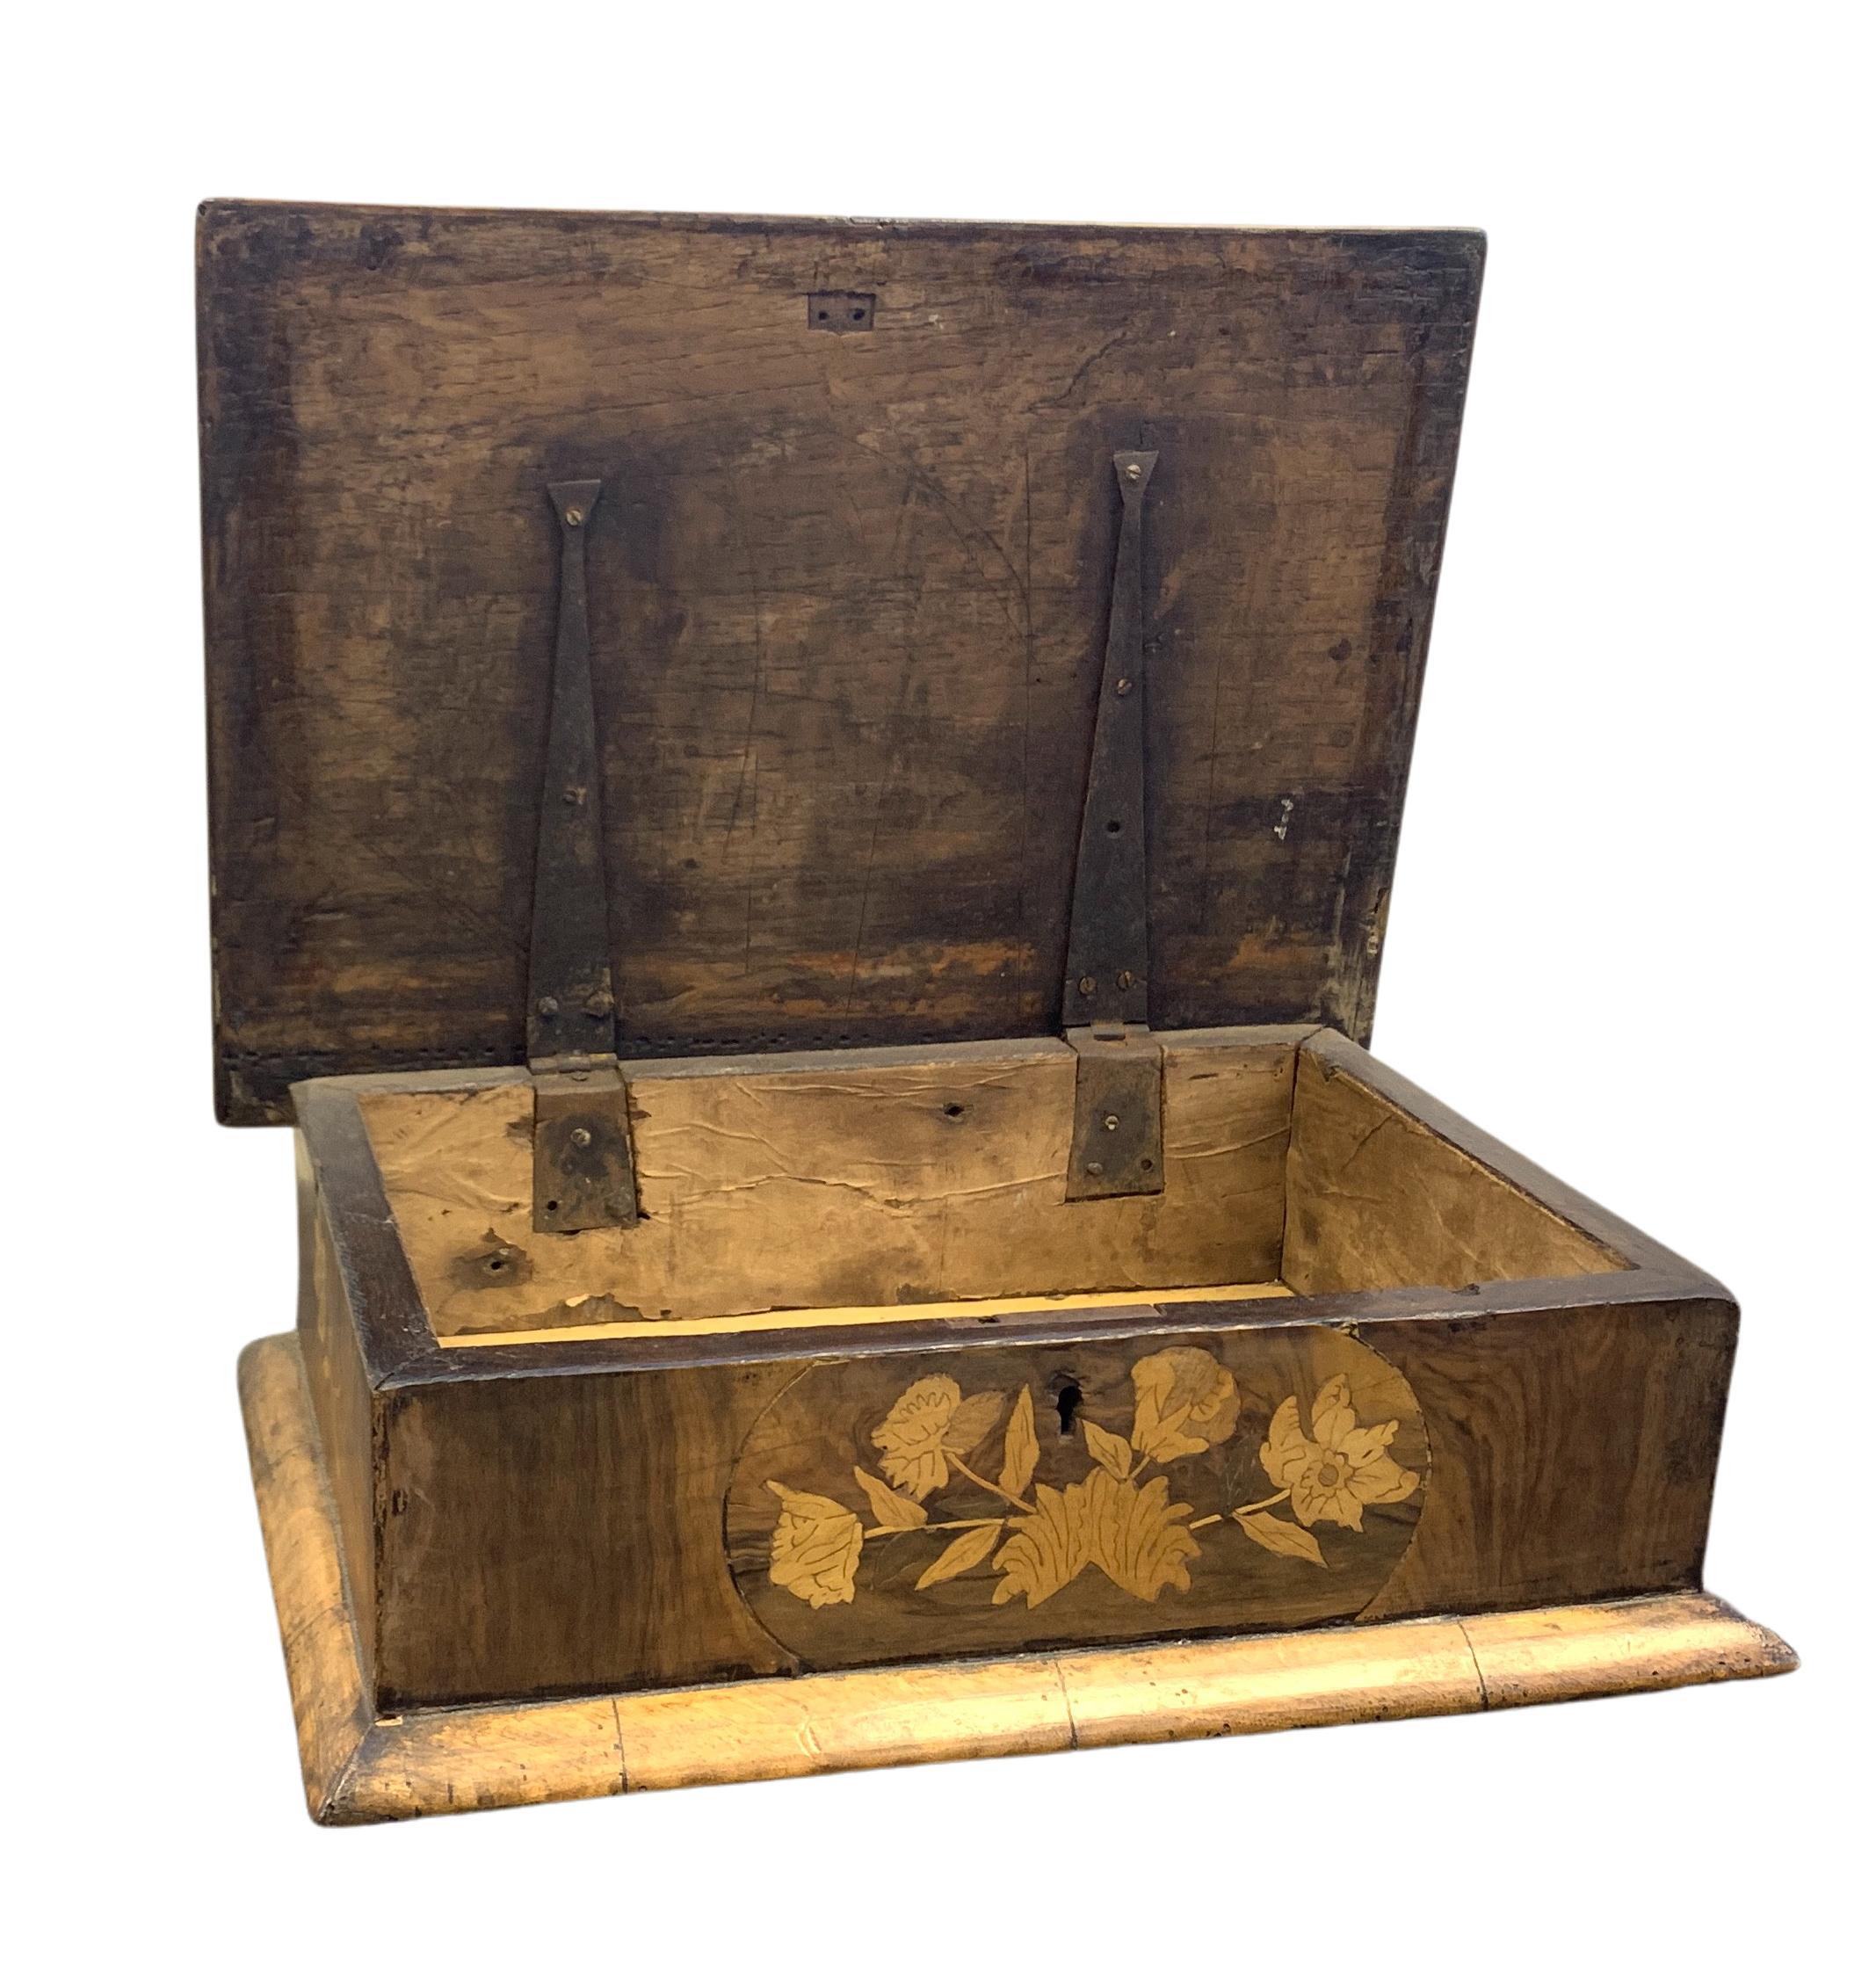 17th century box